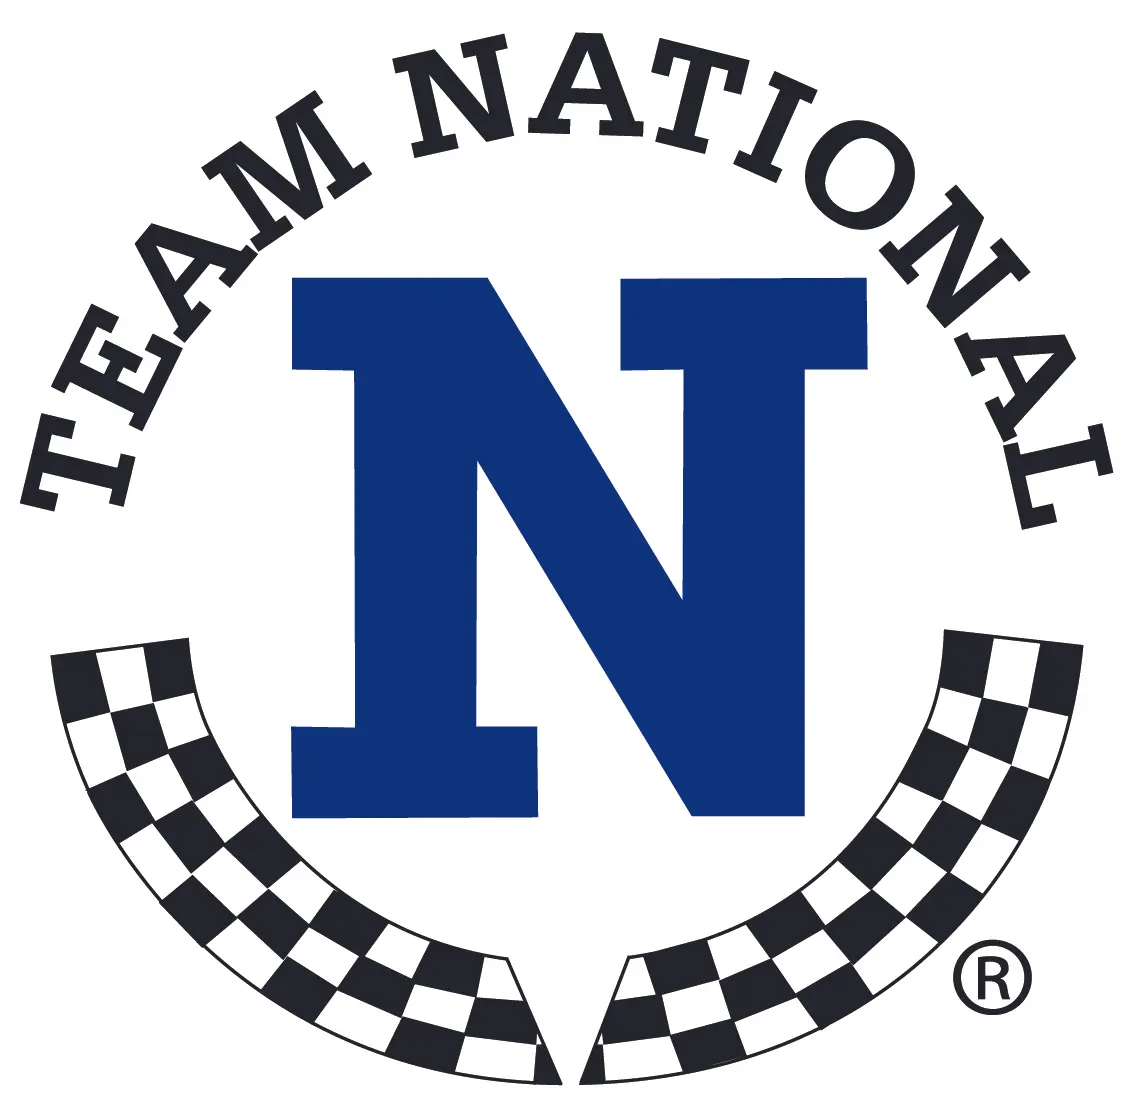 Team National